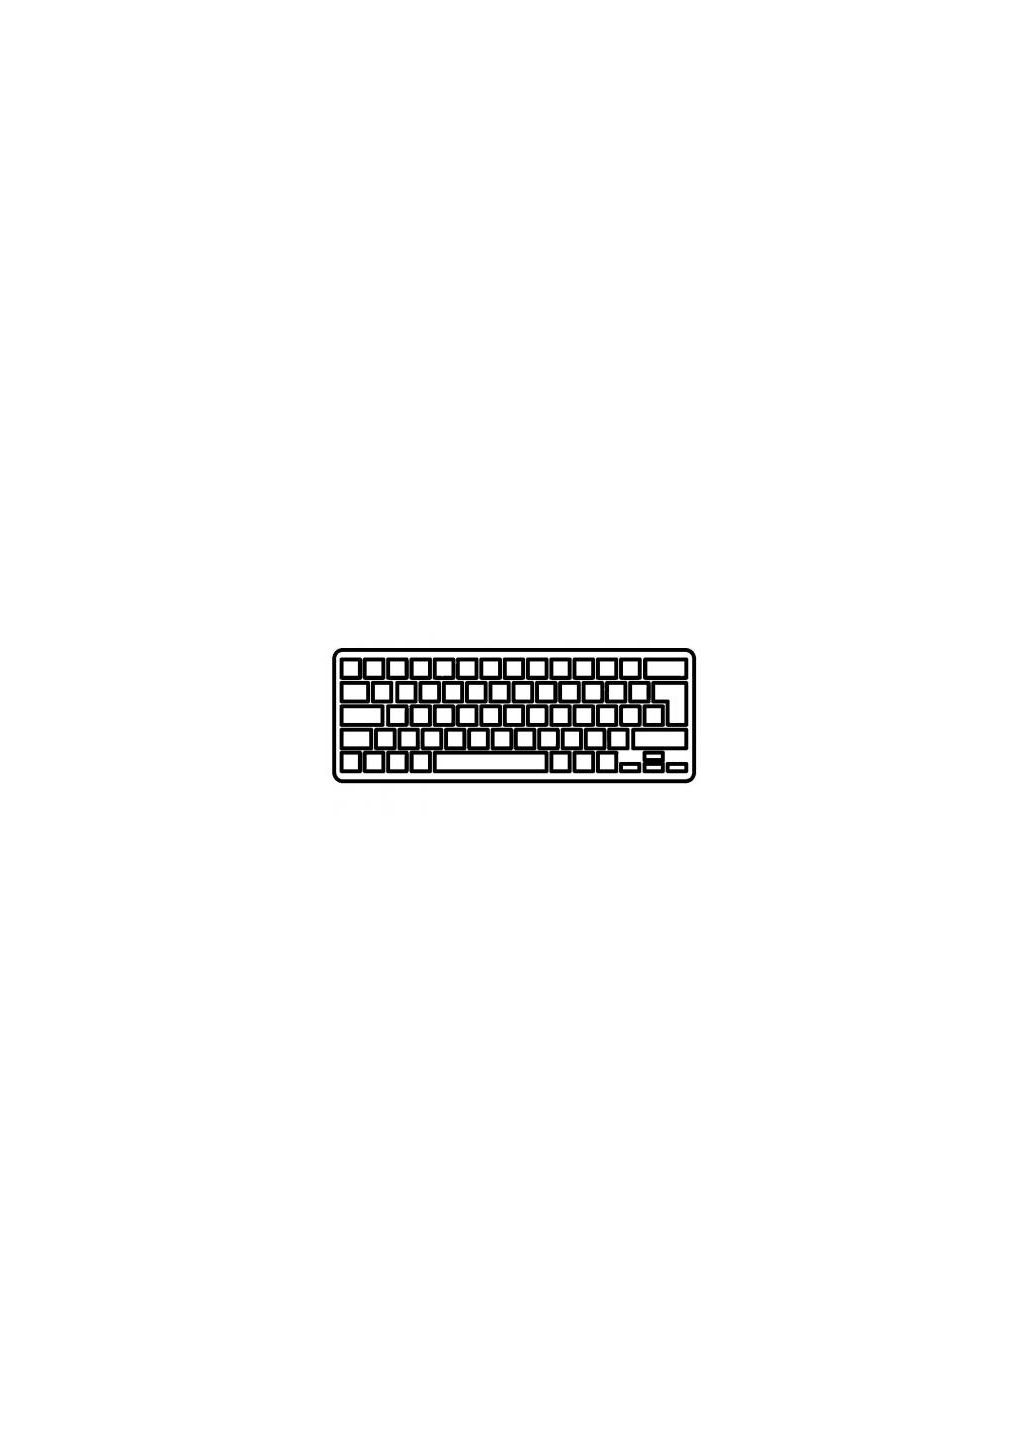 Клавиатура ноутбука Macbook Pro 15.4" A1286 (2008 года) черн. без рамки UA/RU/US (A43061) Apple macbook pro 15.4" a1286 (2008 года) черн.без рамки (276707501)